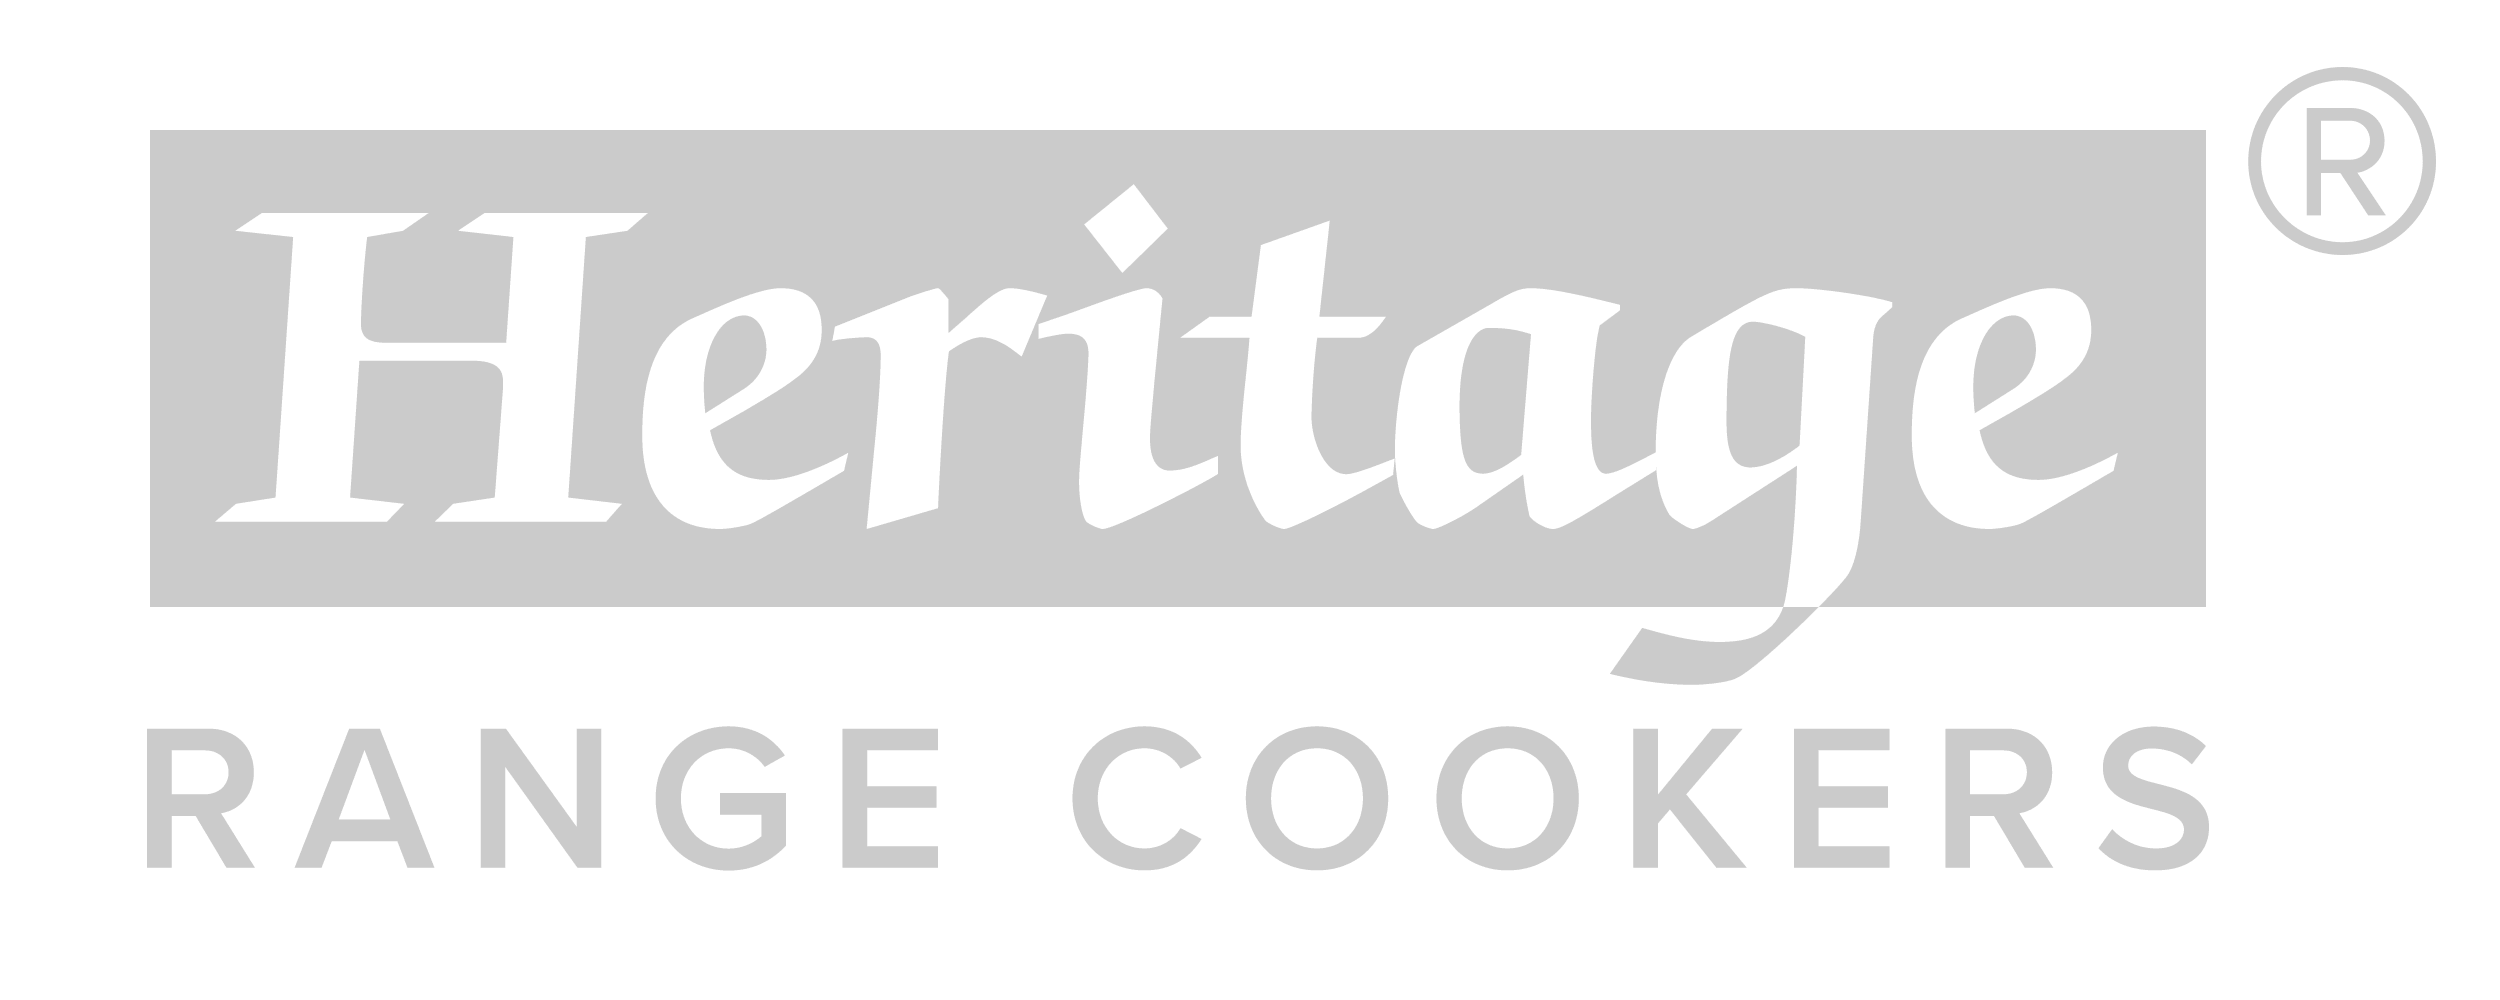 Heritage Range Cookers